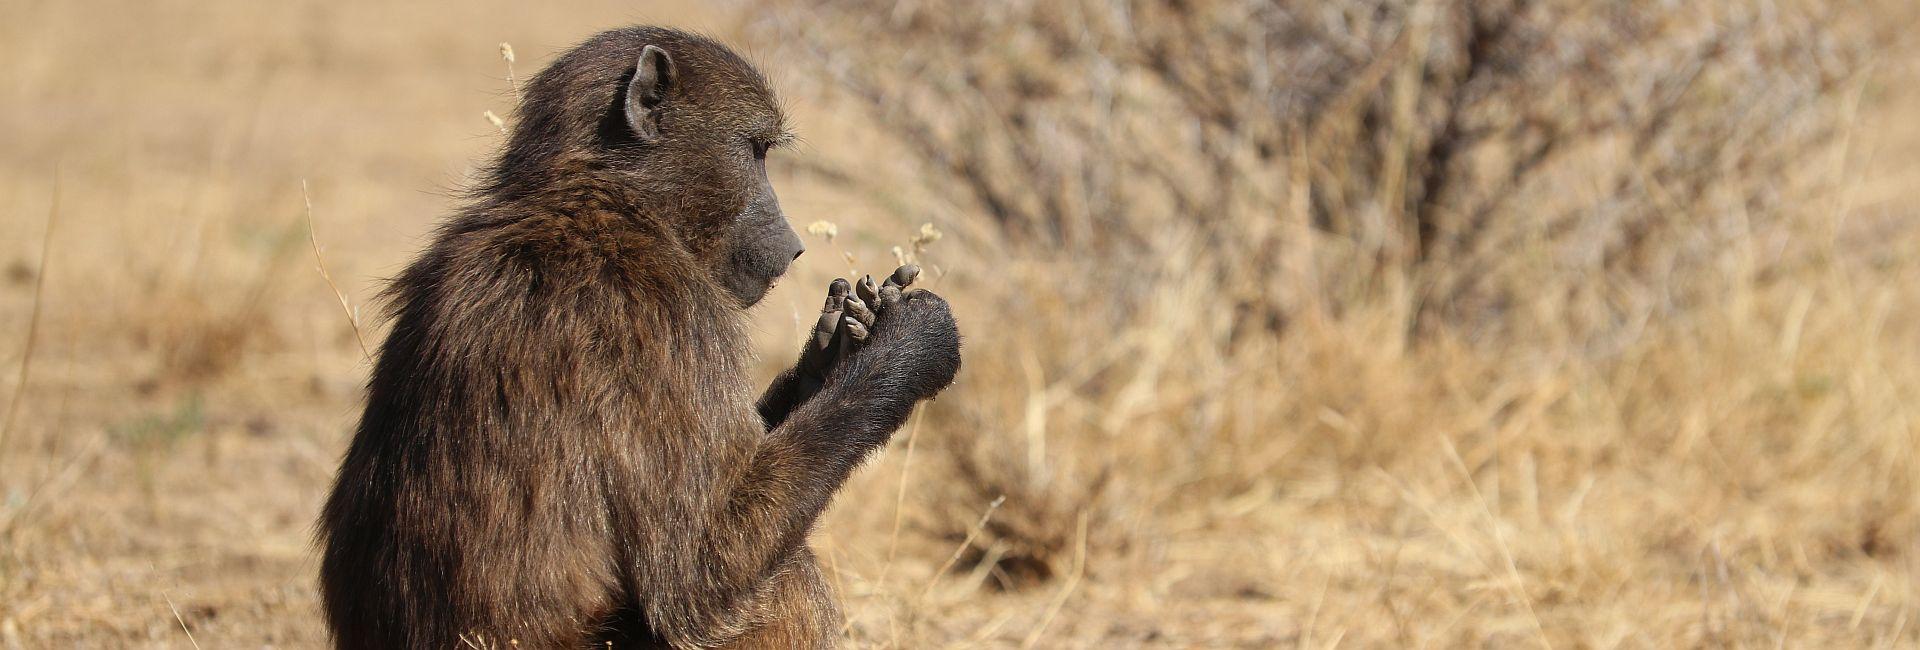 Namibia Wildlife Sanctuary Volunteer Reviews